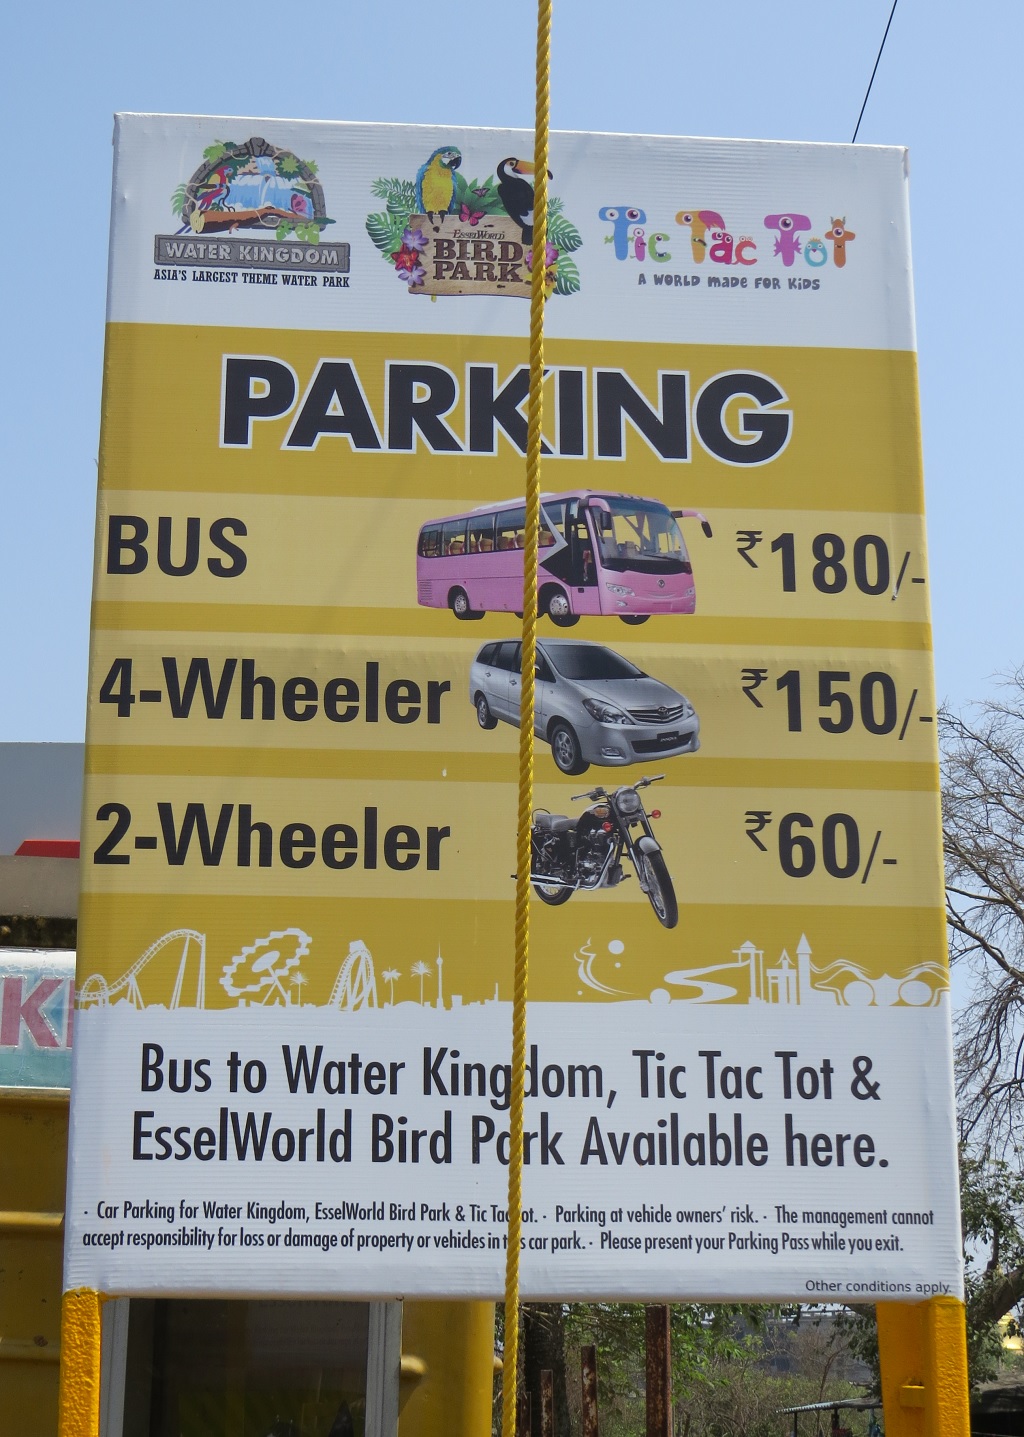 Parking Rates for Water Kingdom/Bird Park/Tic Tac Tot